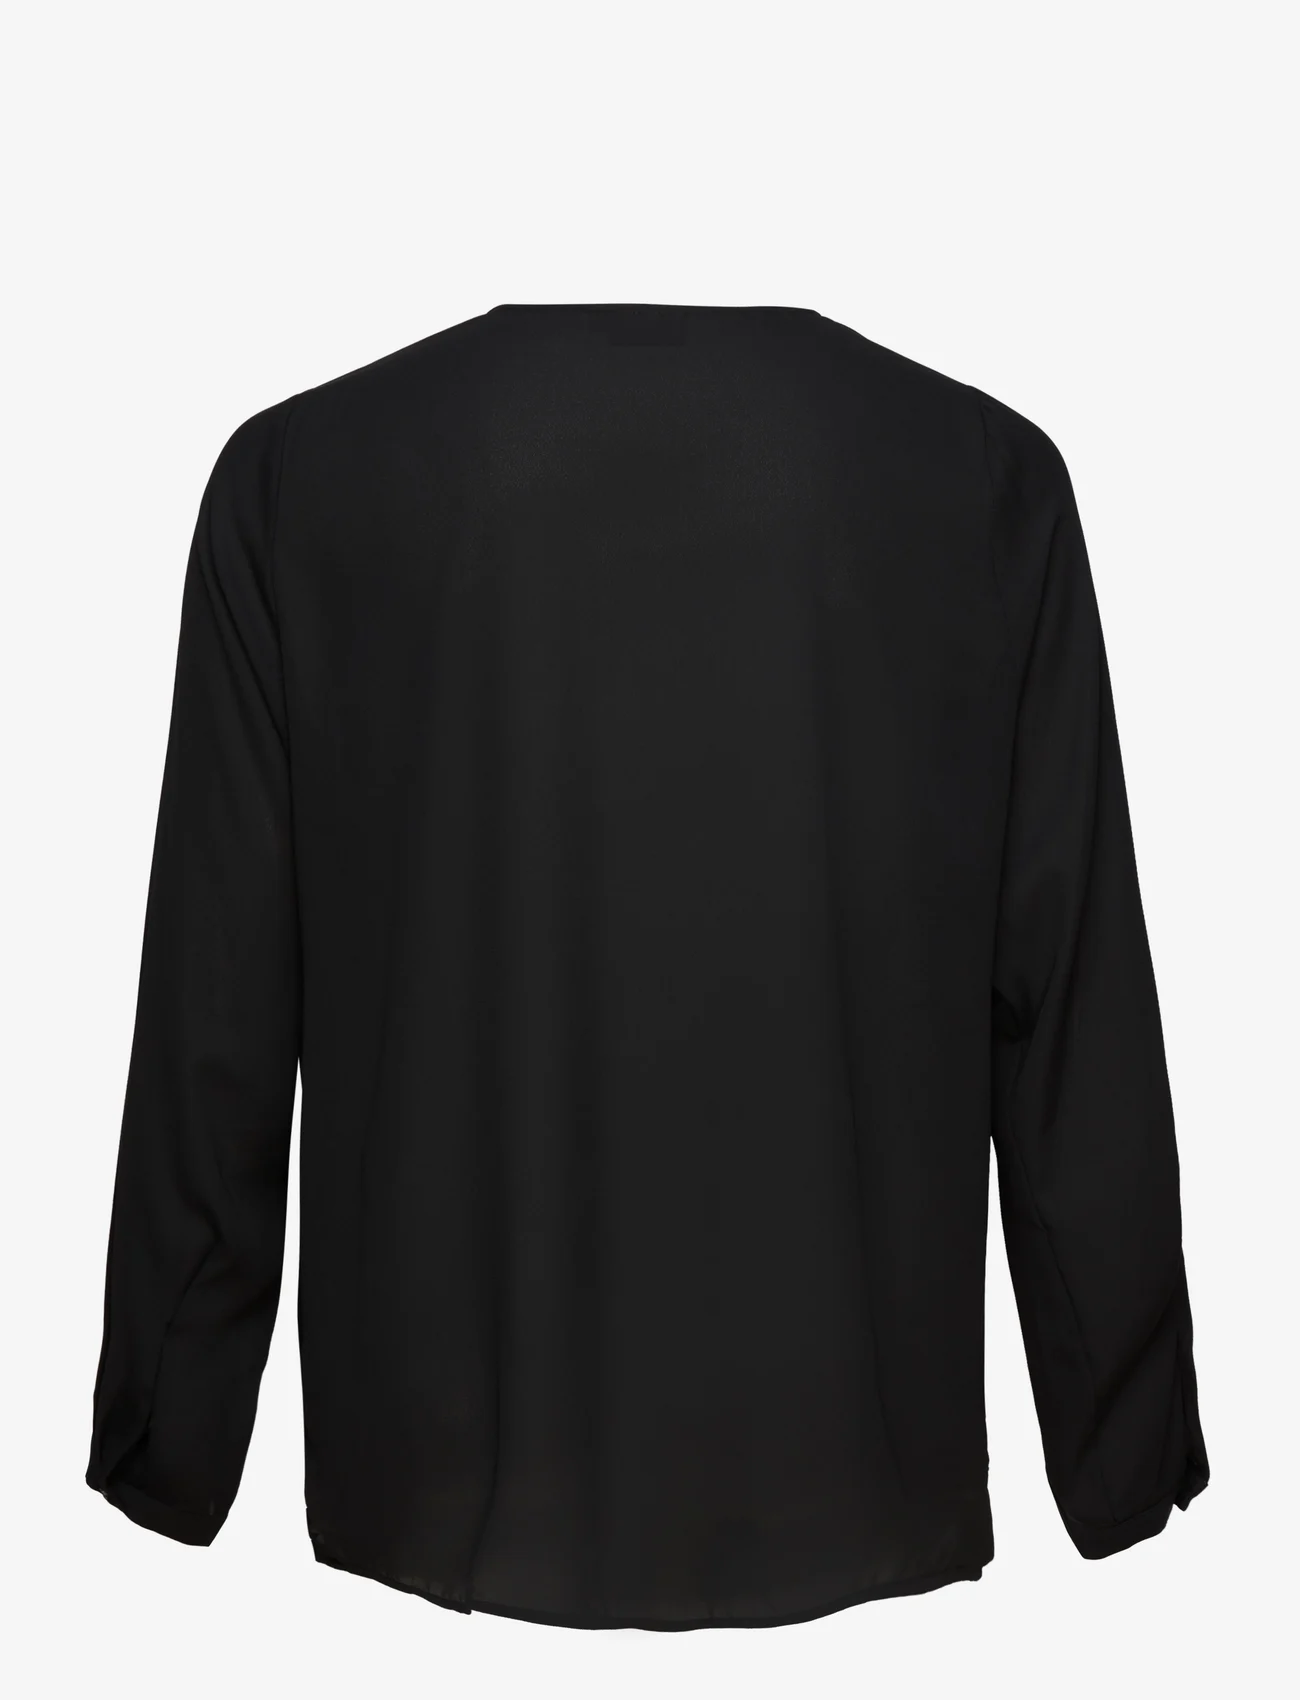 Zizzi - VSELI, L/S, SHIRT - pitkähihaiset paidat - black - 1